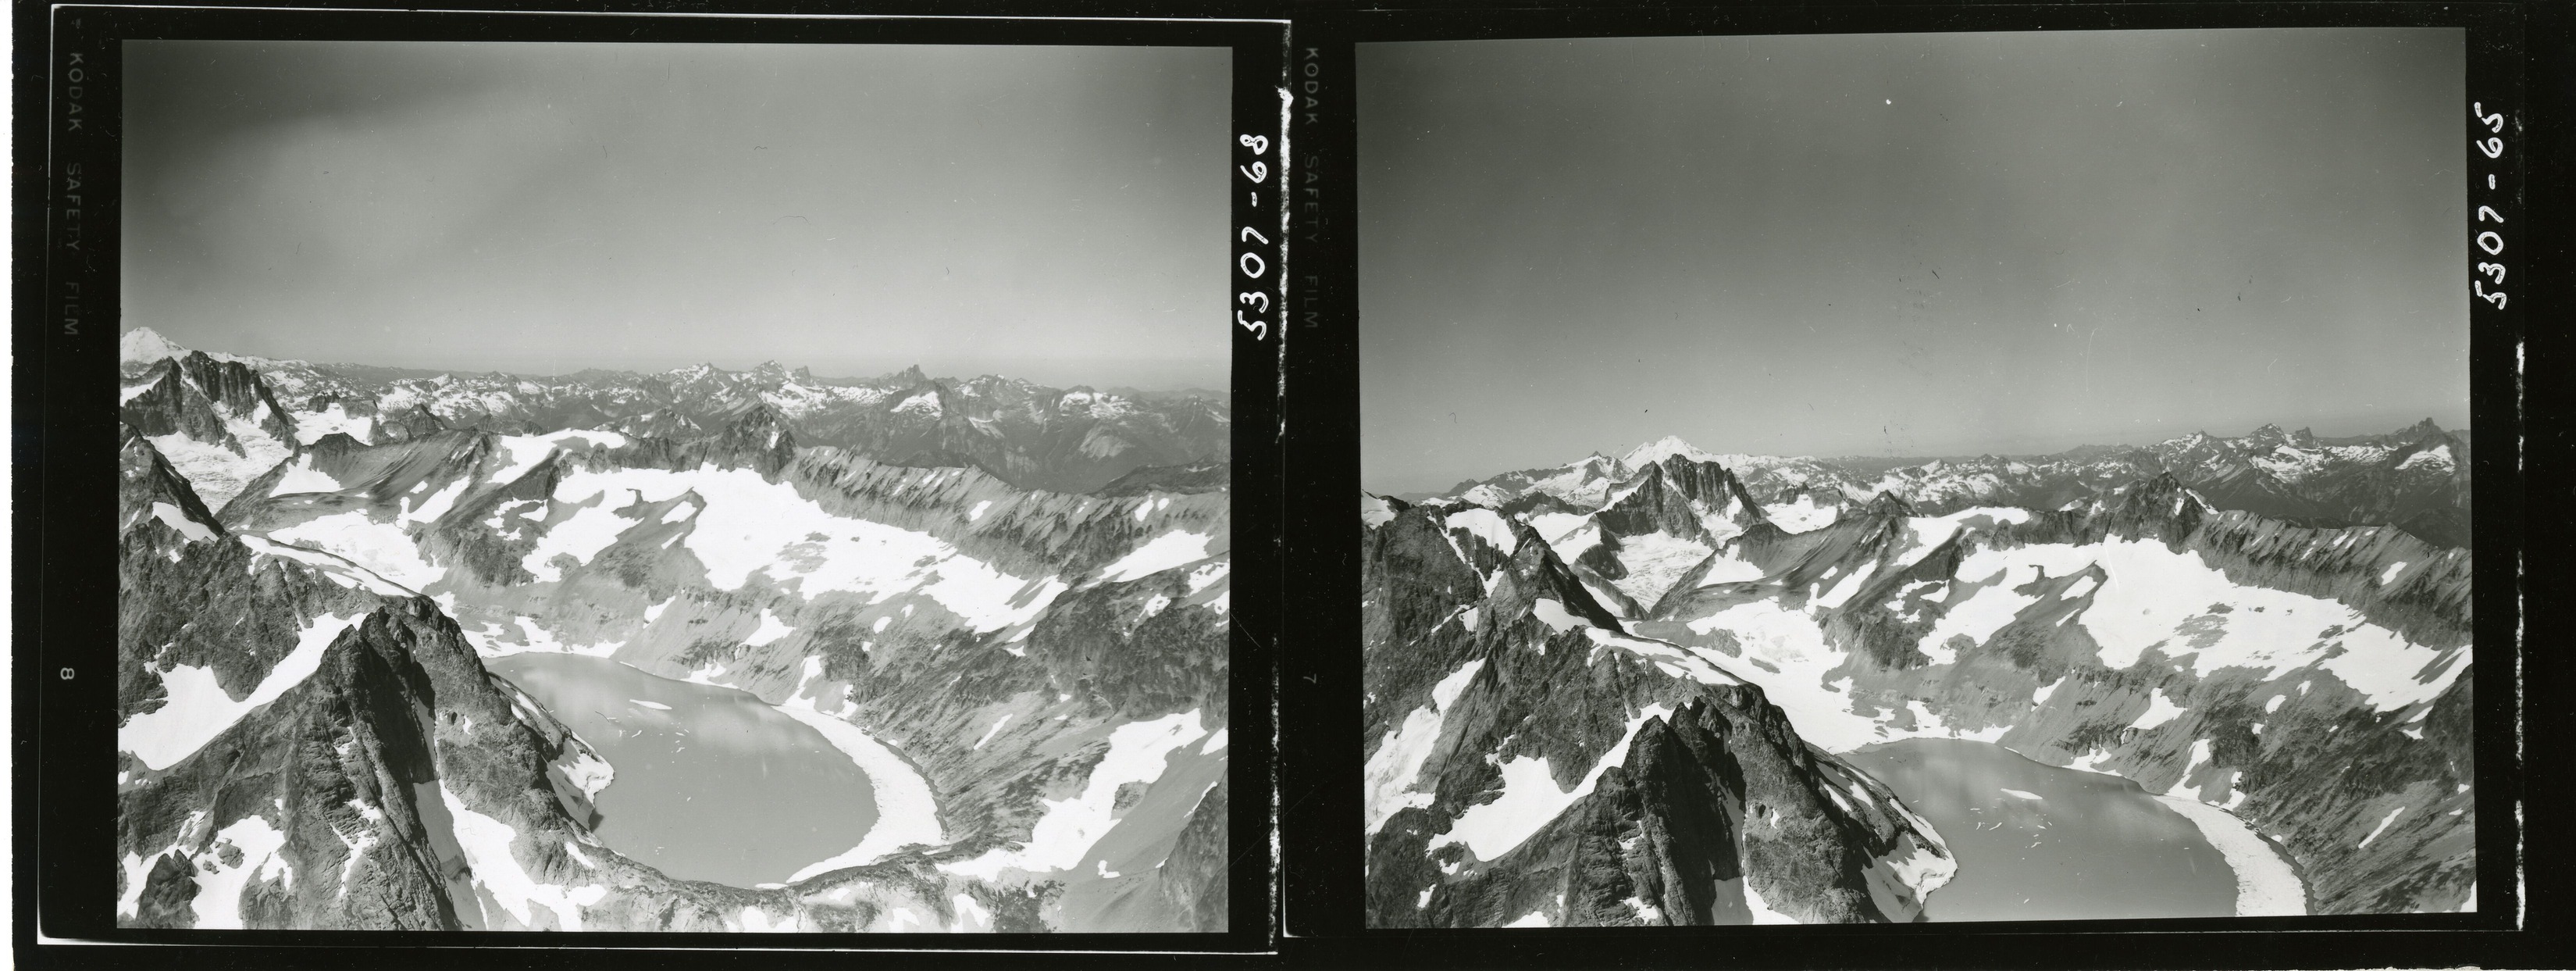 Dual photo set of aerial views of a mountain lake amid glaciated peaks.